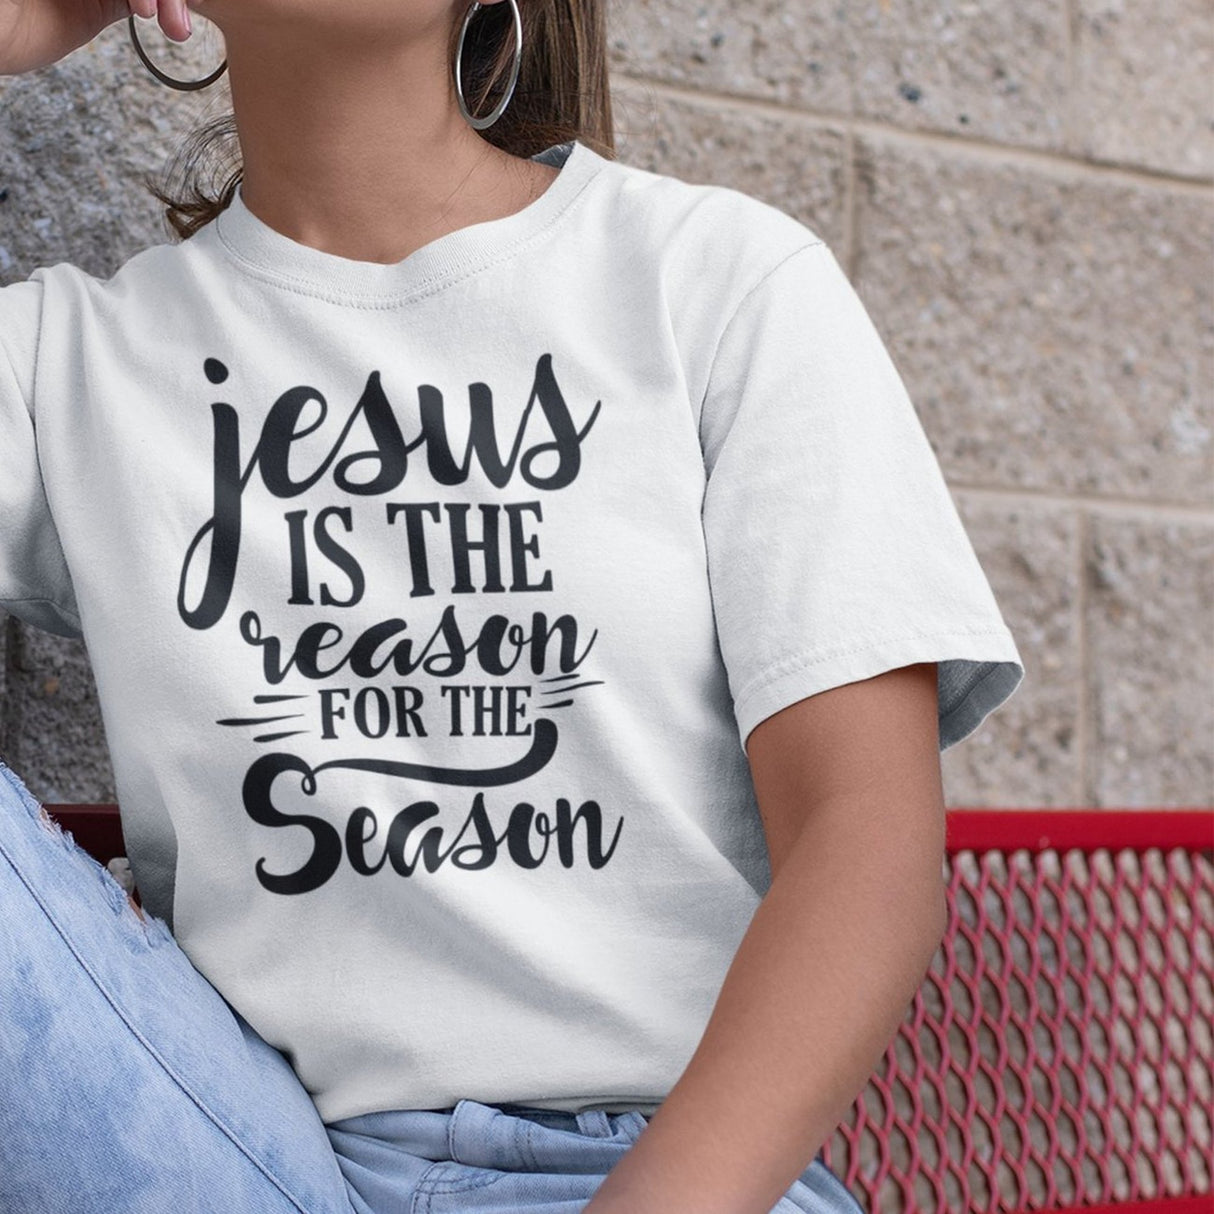 jesus-is-the-reason-for-the-season-jesus-tee-reason-t-shirt-christian-tee-t-shirt-tee#color_white